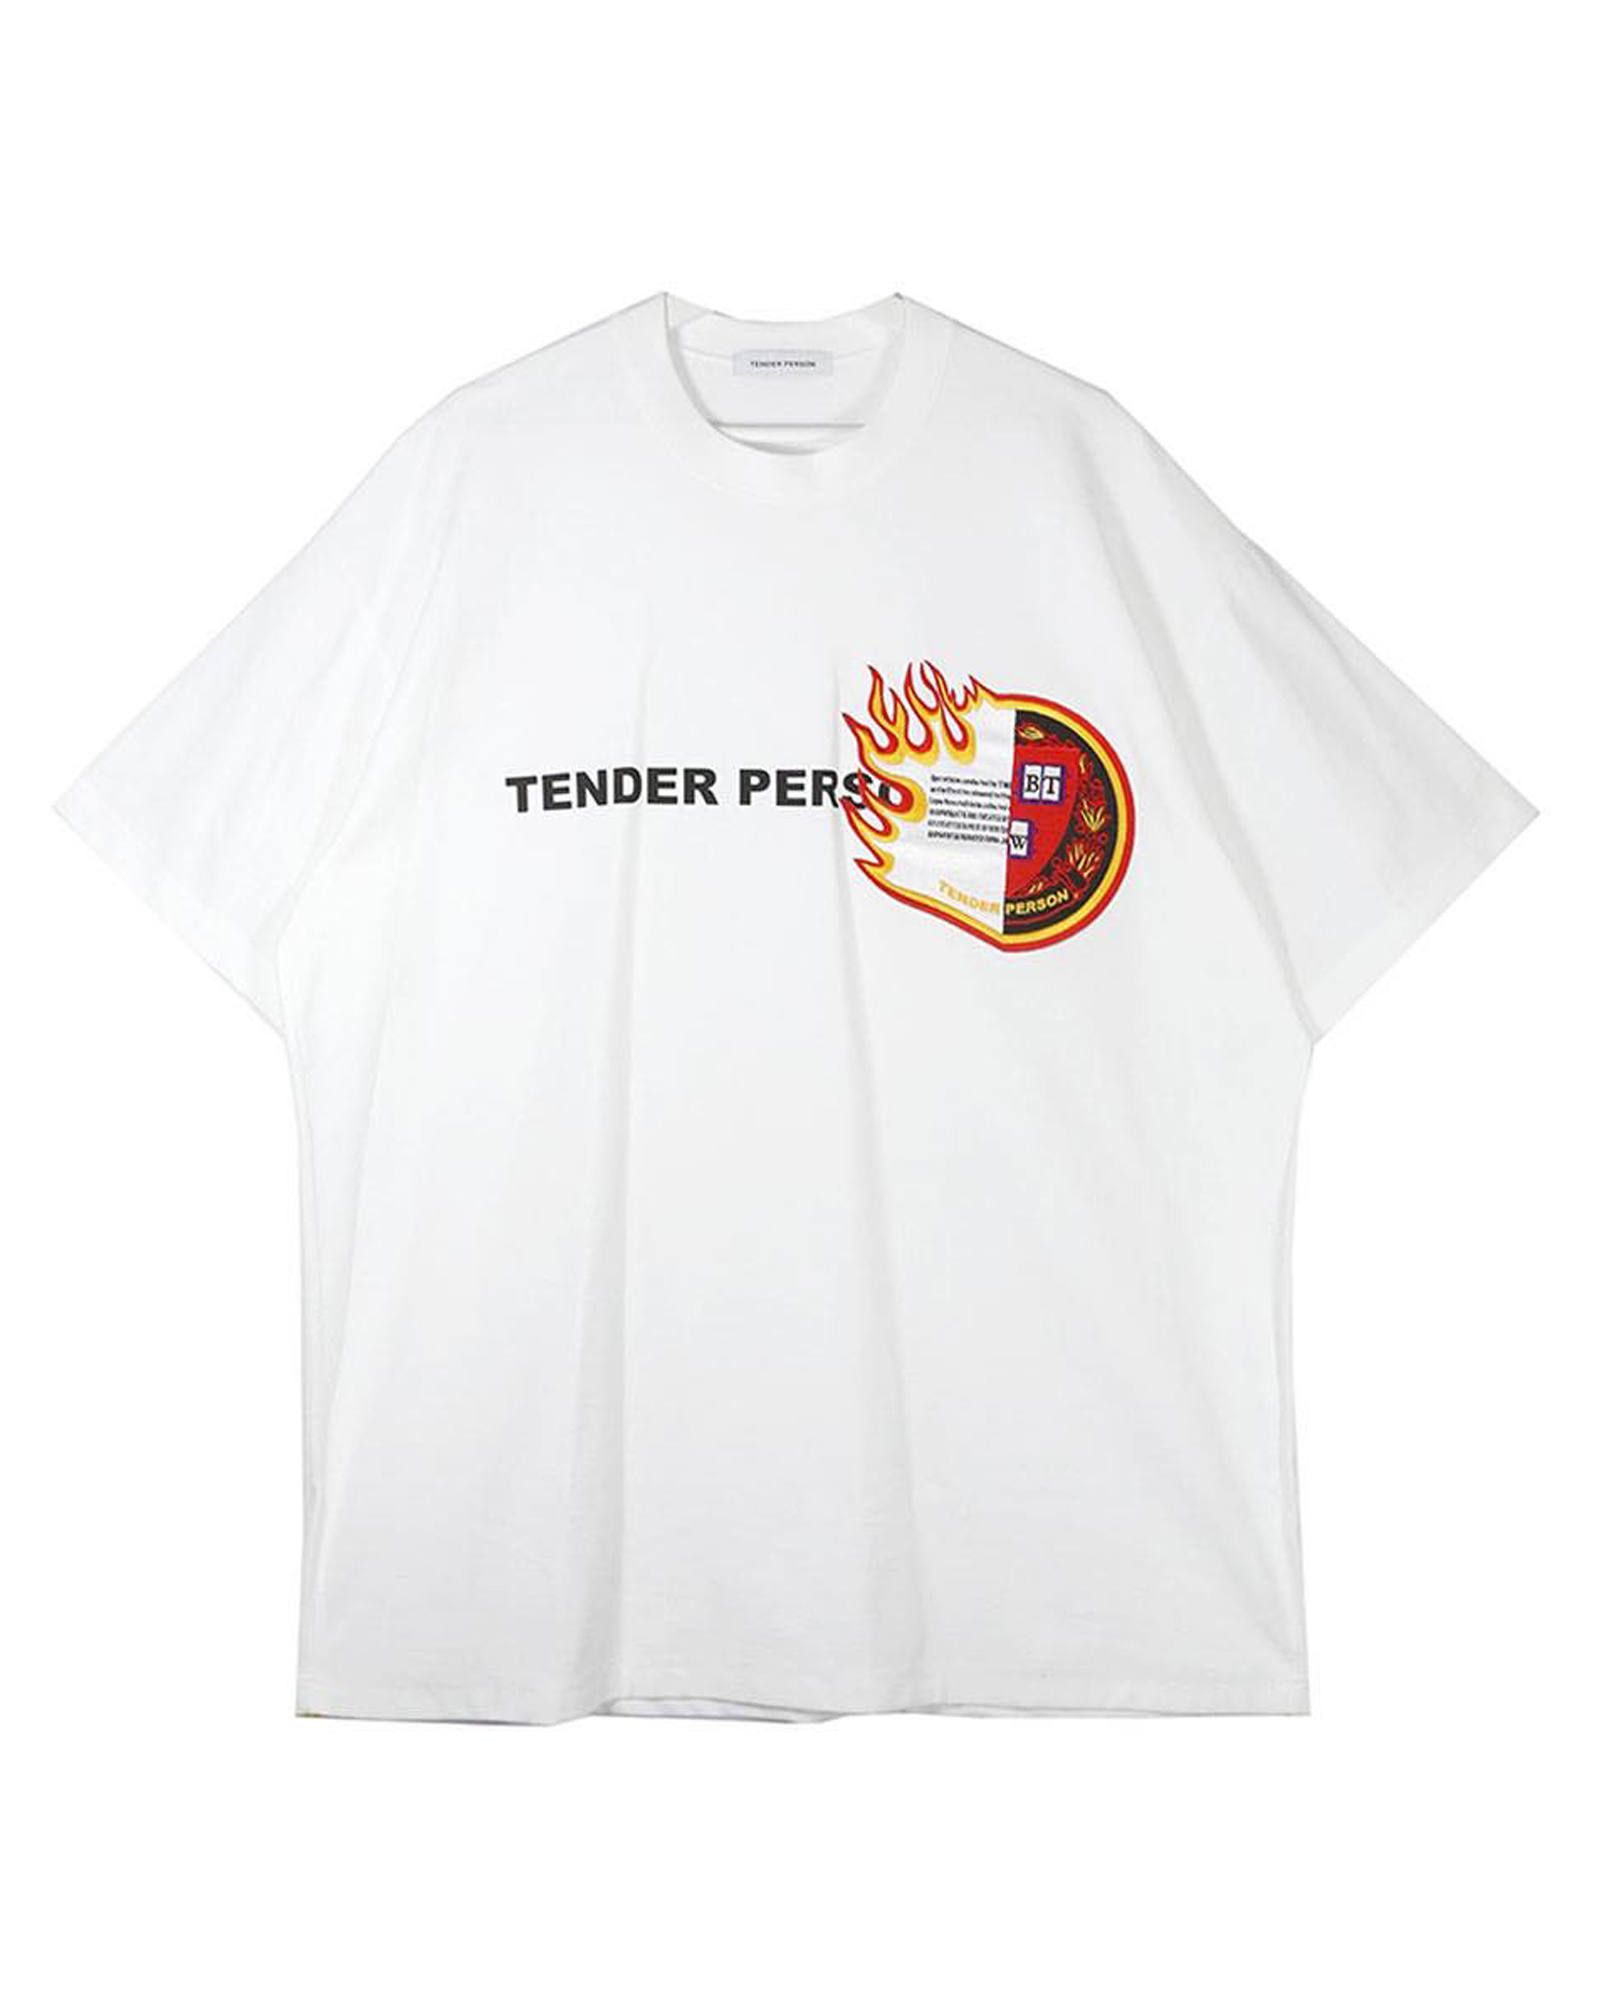 TENDER PERSON - Emblem Tee | fakejam